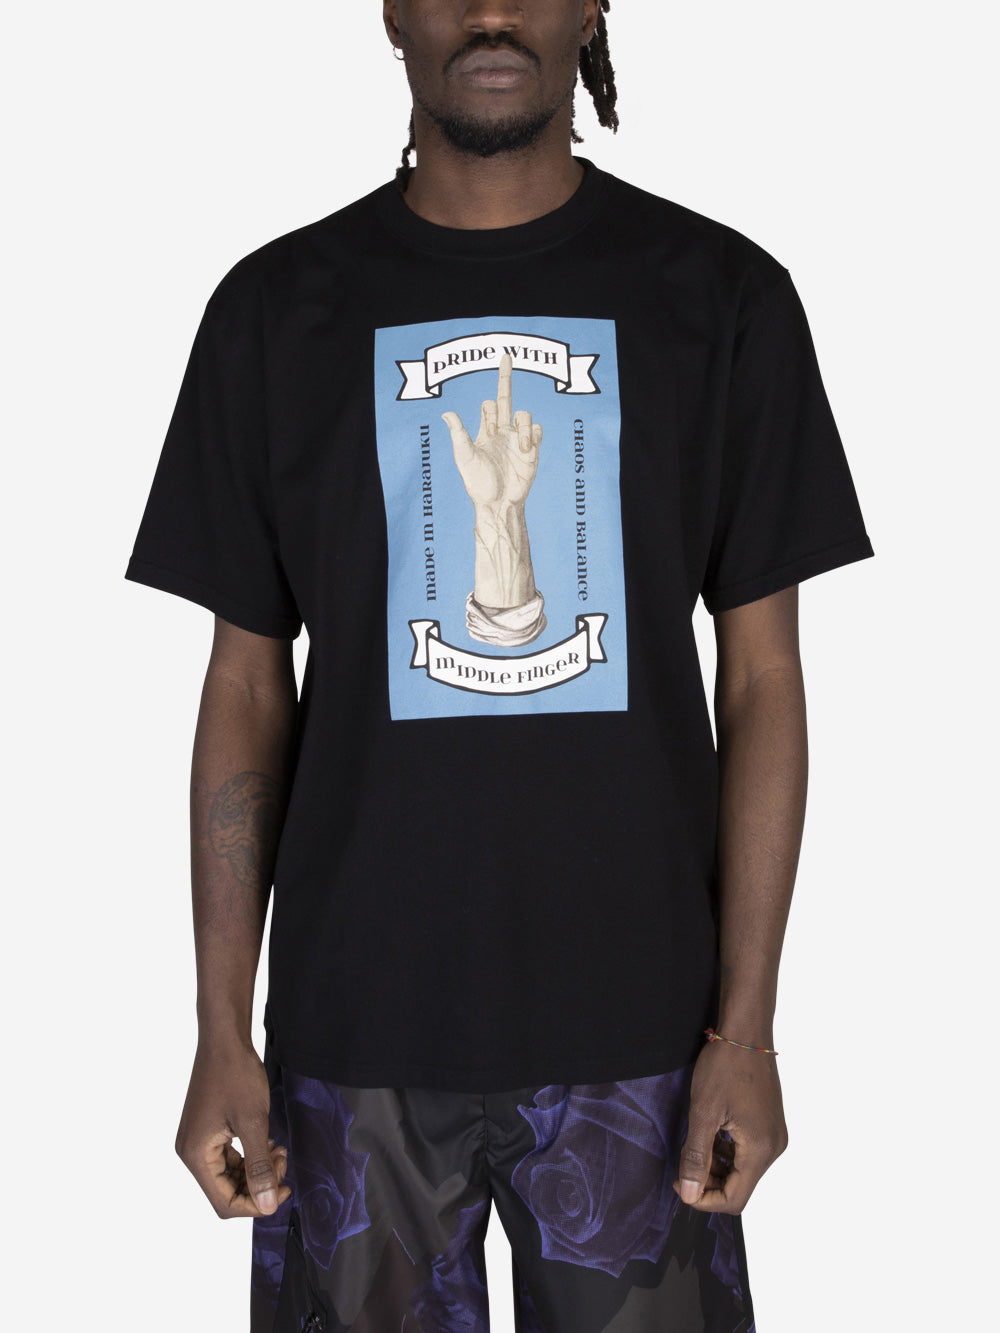 UNDERCOVER T-shirt 'Middle Finger' Nero Urbanstaroma